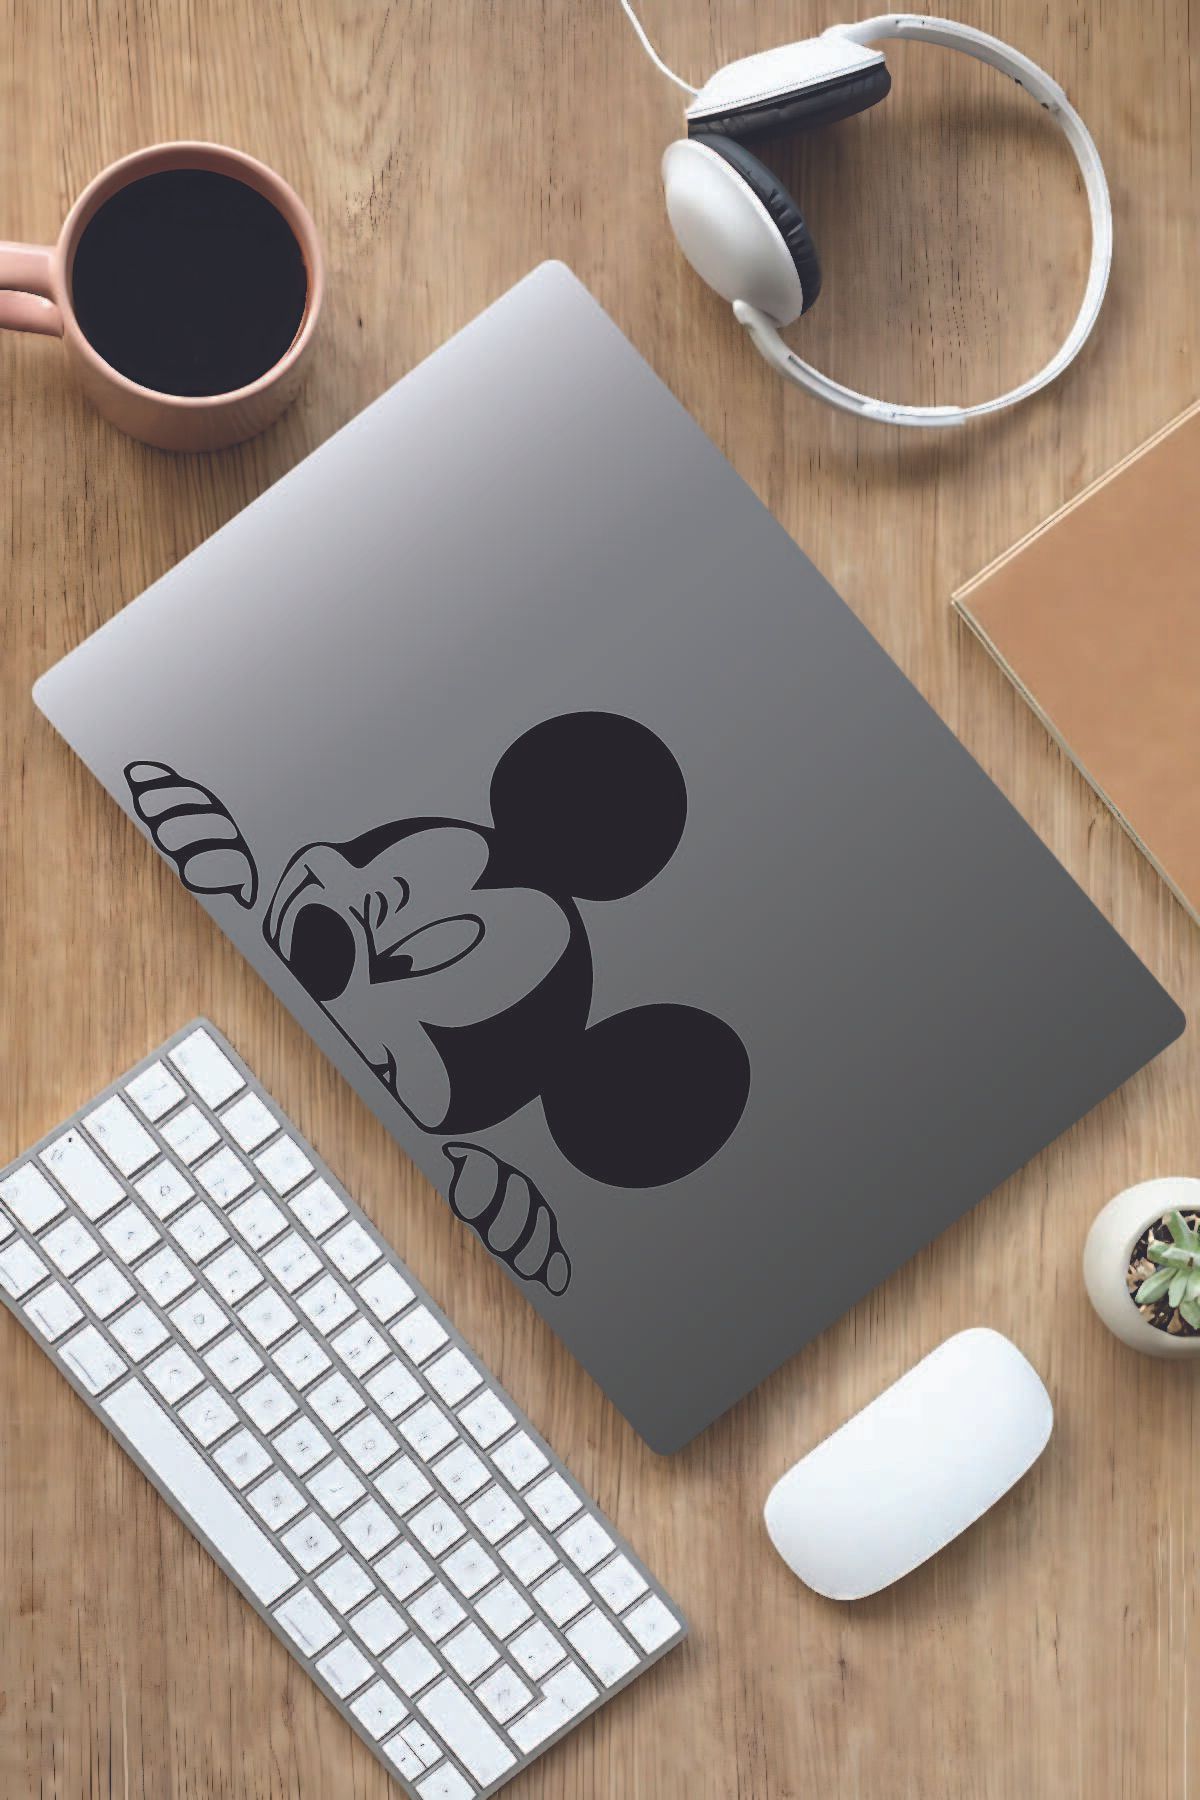 Wannart Mickey Mouse Sticker Laptop Araba Duvar Cam Etiket Çıkartma Siyah 17x11 Cm